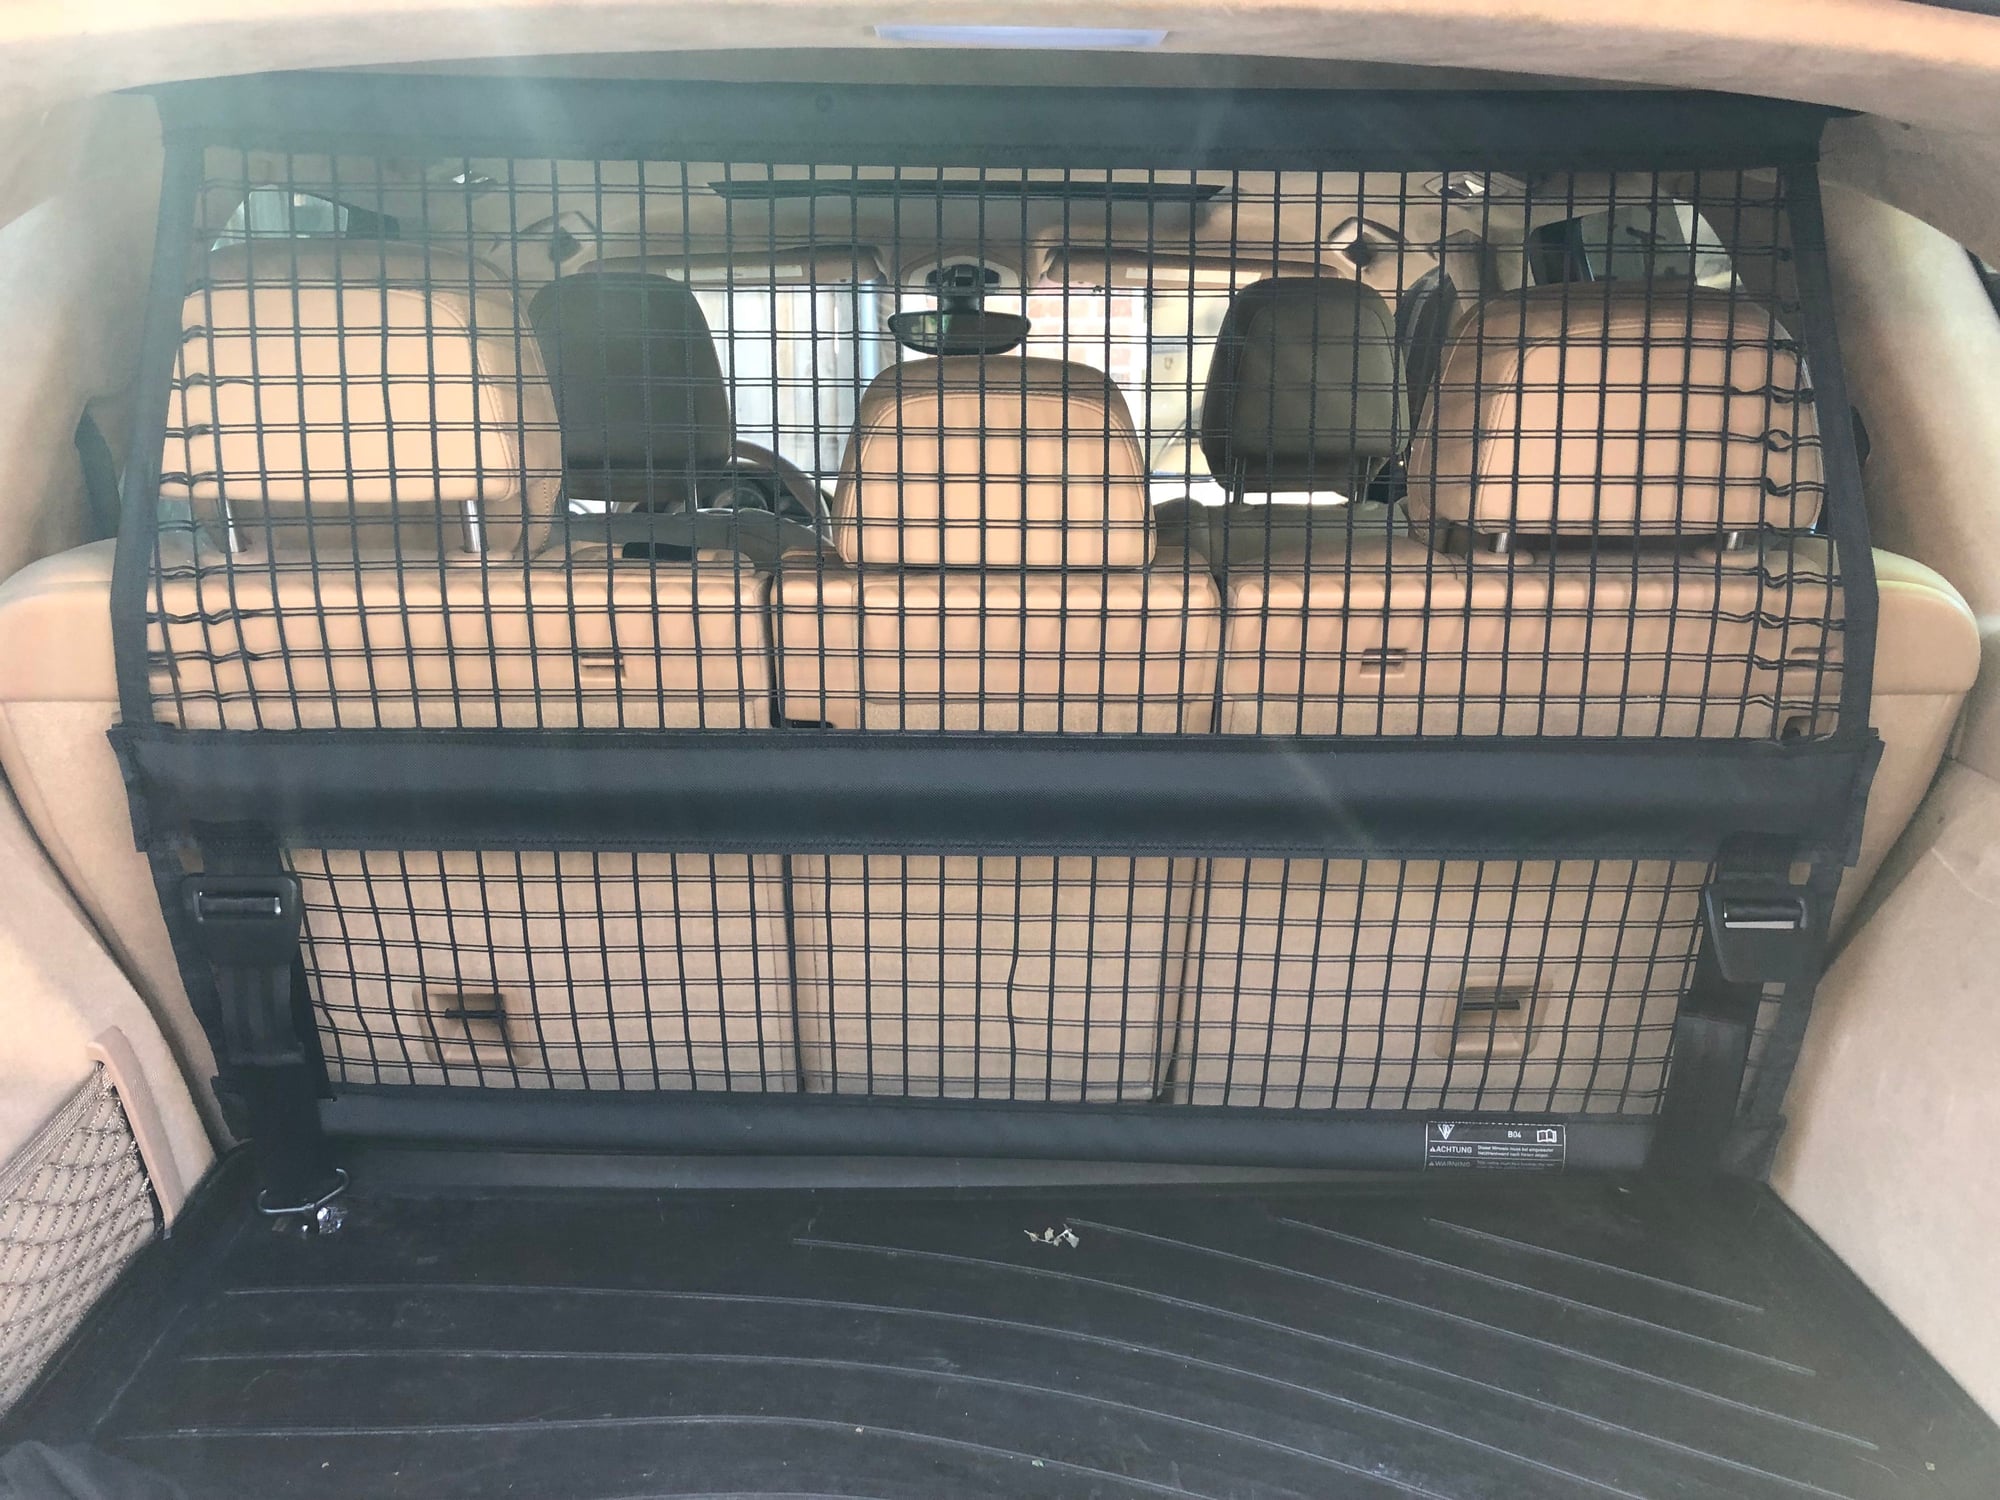 Accessories - 958 Cayenne Rear Cargo Partition Net - Used - 2011 to 2018 Porsche Cayenne - Dallas, TX 75225, United States